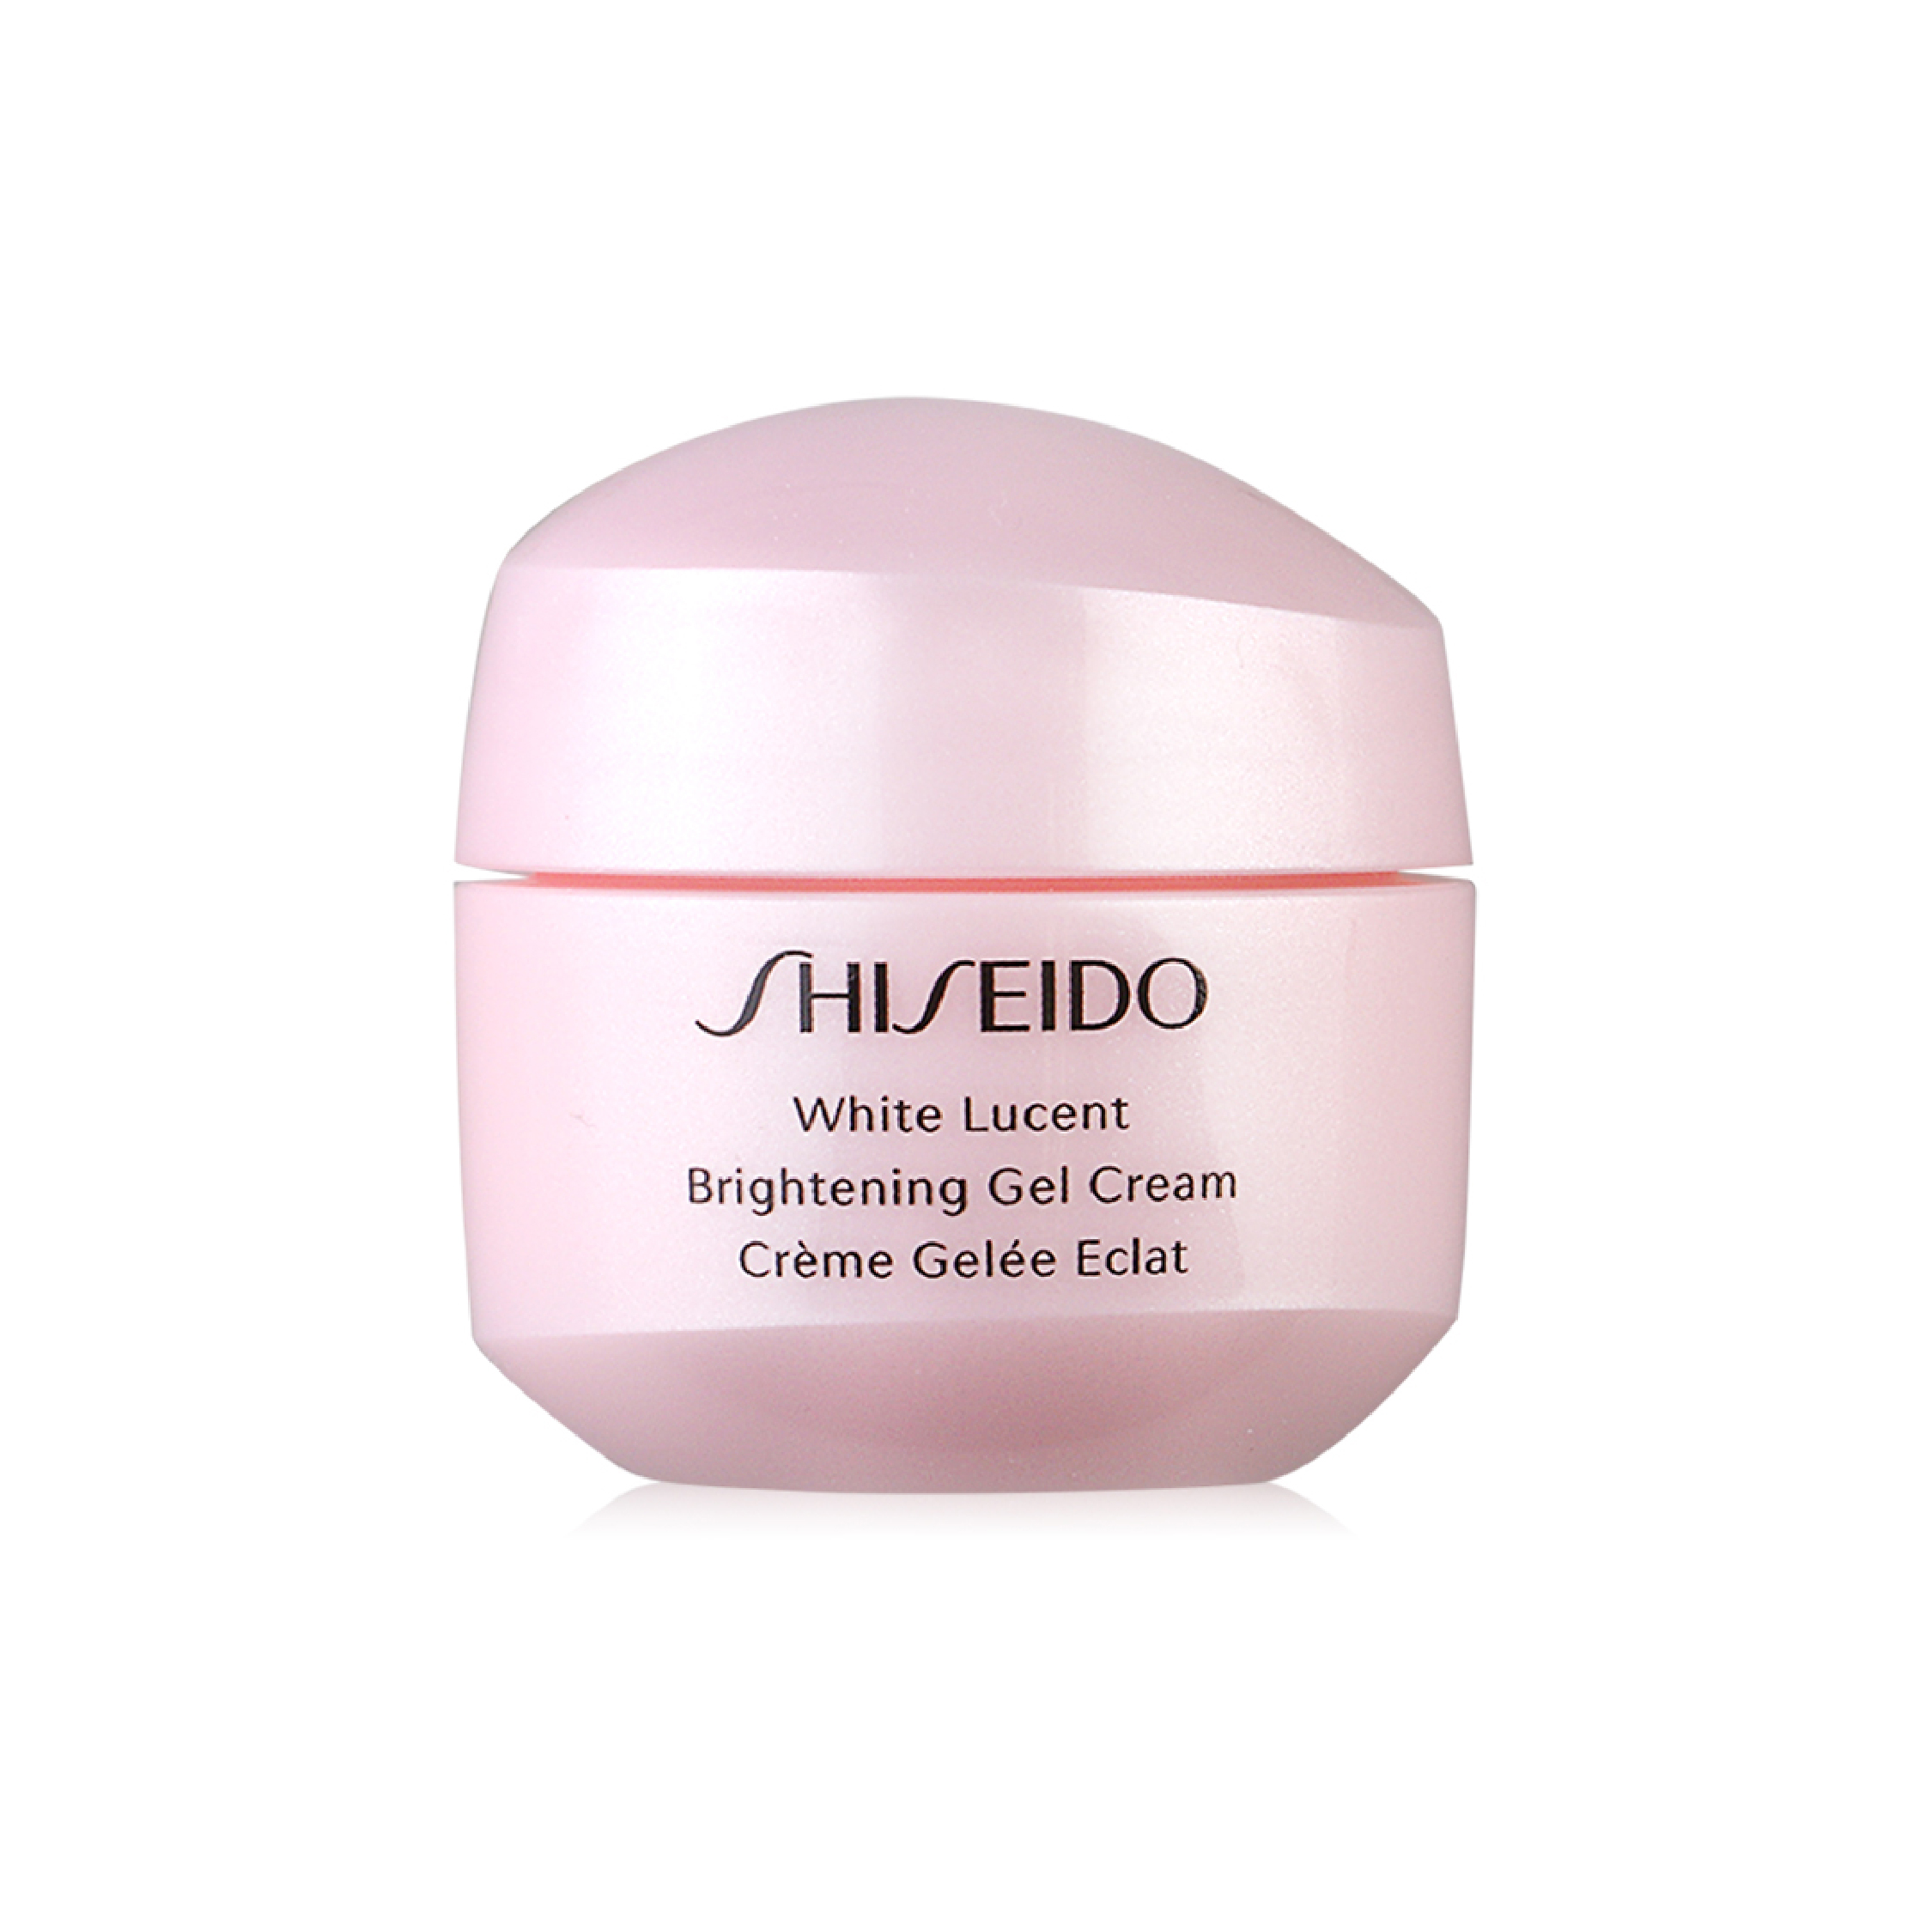 Shiseido White Lucent Brightening Gel Cream 15ml